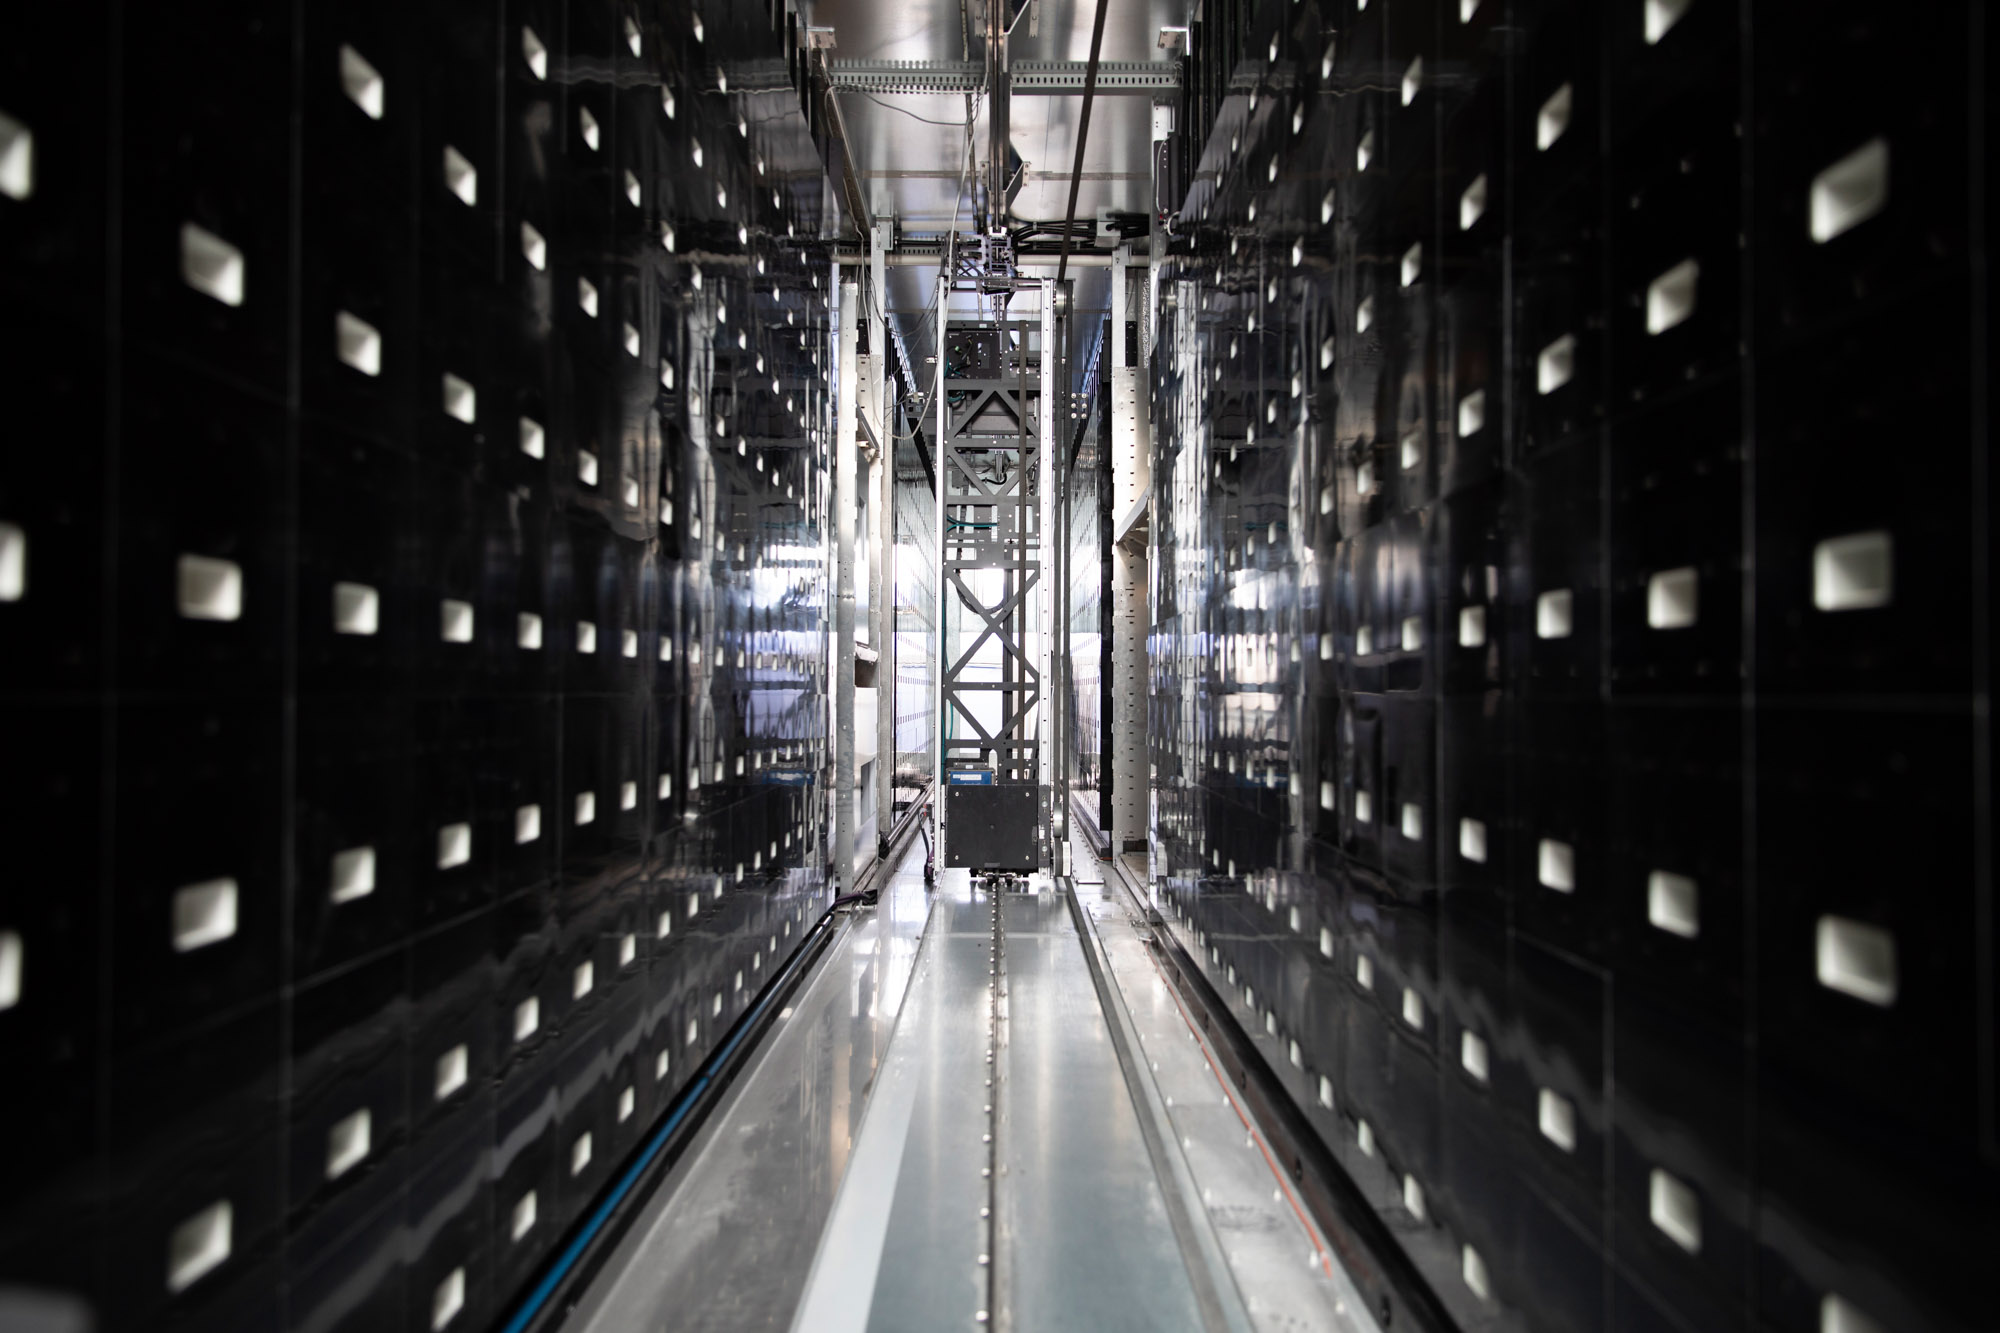 Inside a Quad bank automated storage